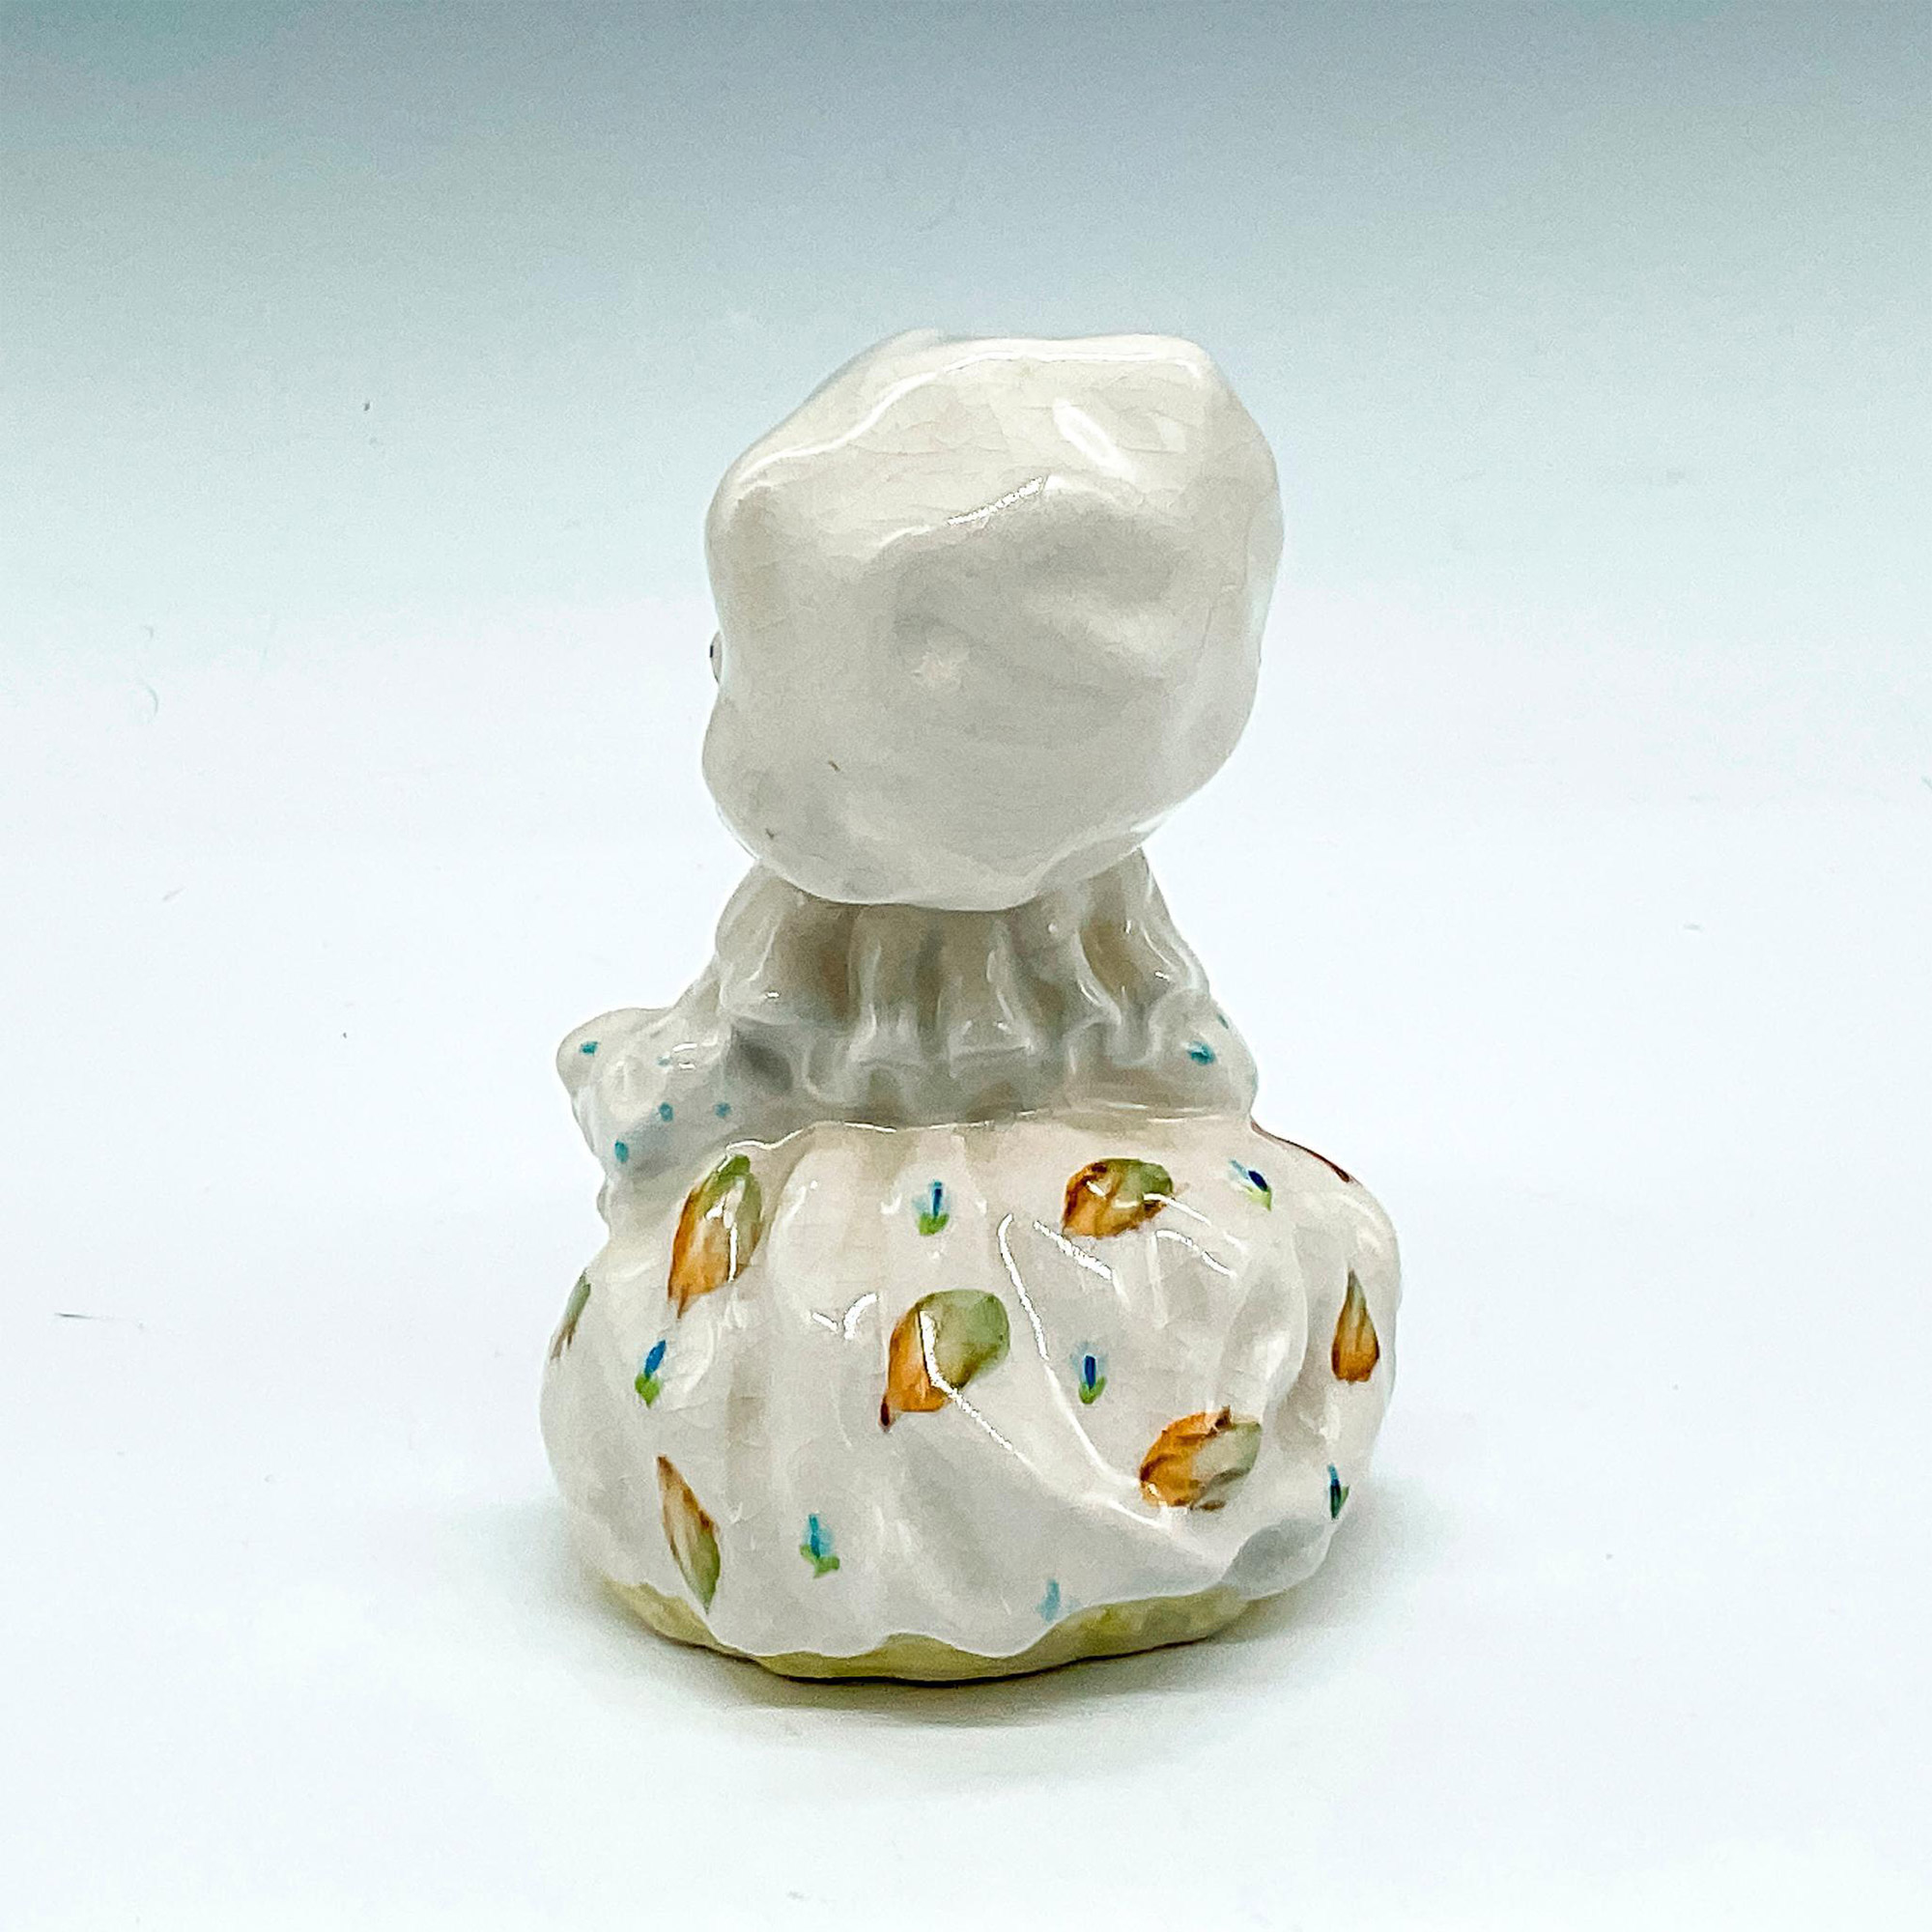 Beswick Beatrix Potter's Figurine, Lady Mouse - Image 2 of 3